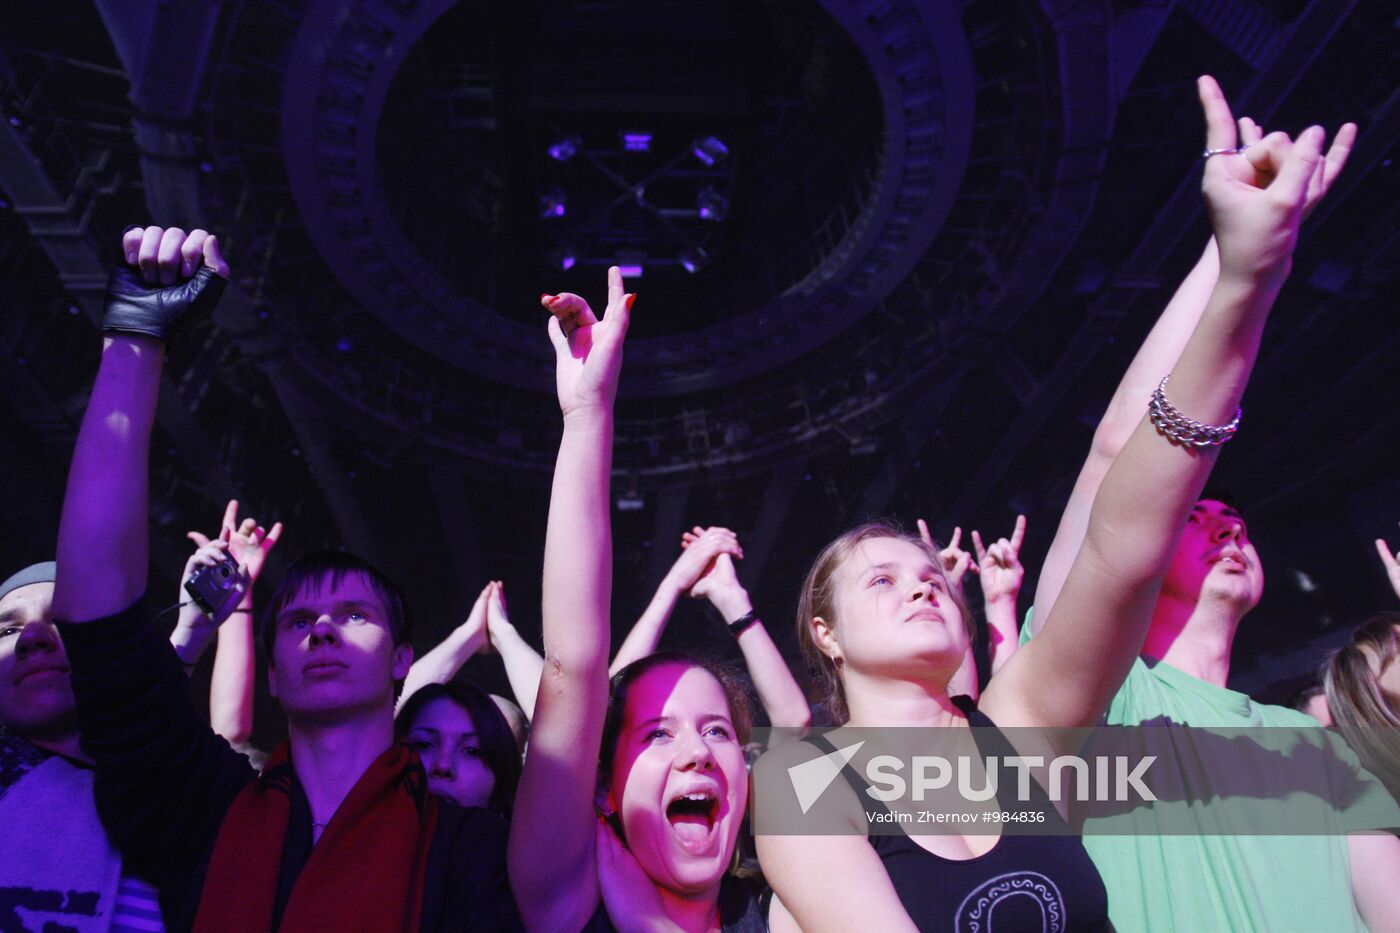 Concert marks Leningrad Rock Club's 30th birthday